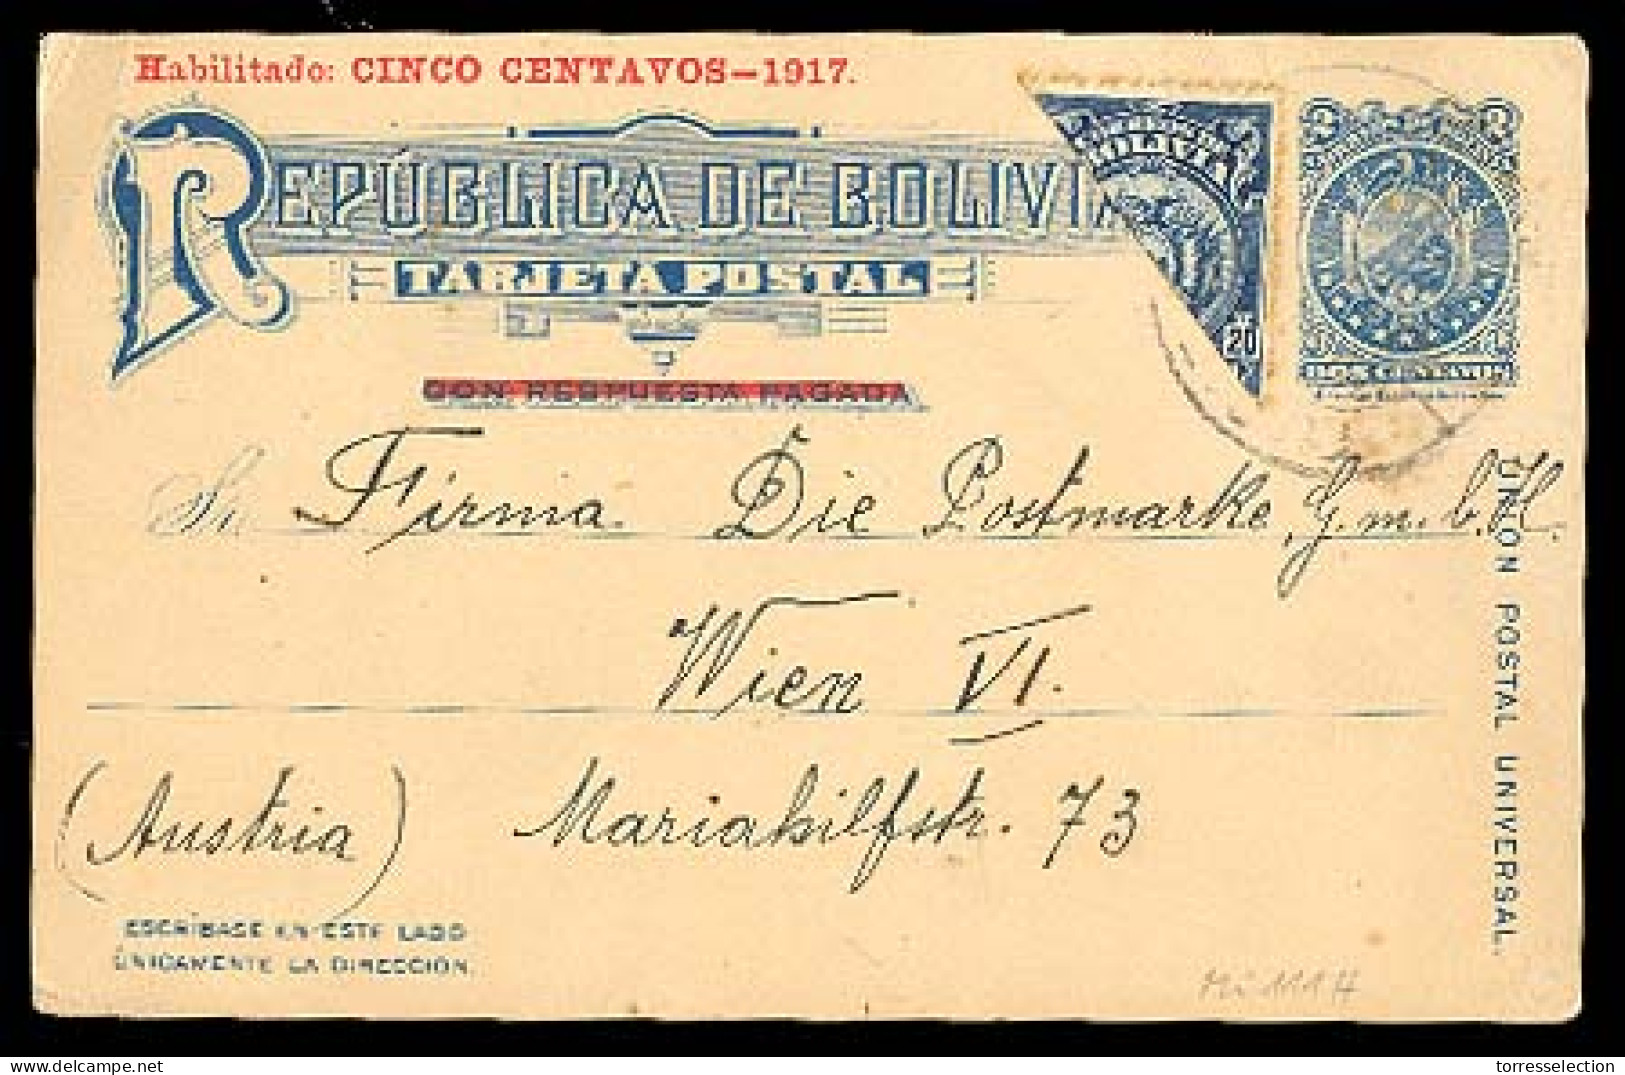 BOLIVIA. 1917. Stationery Card. Ovptd.+ Adtl. Bisected To Austria. Tied. Superb. Tupiza. - Bolivie